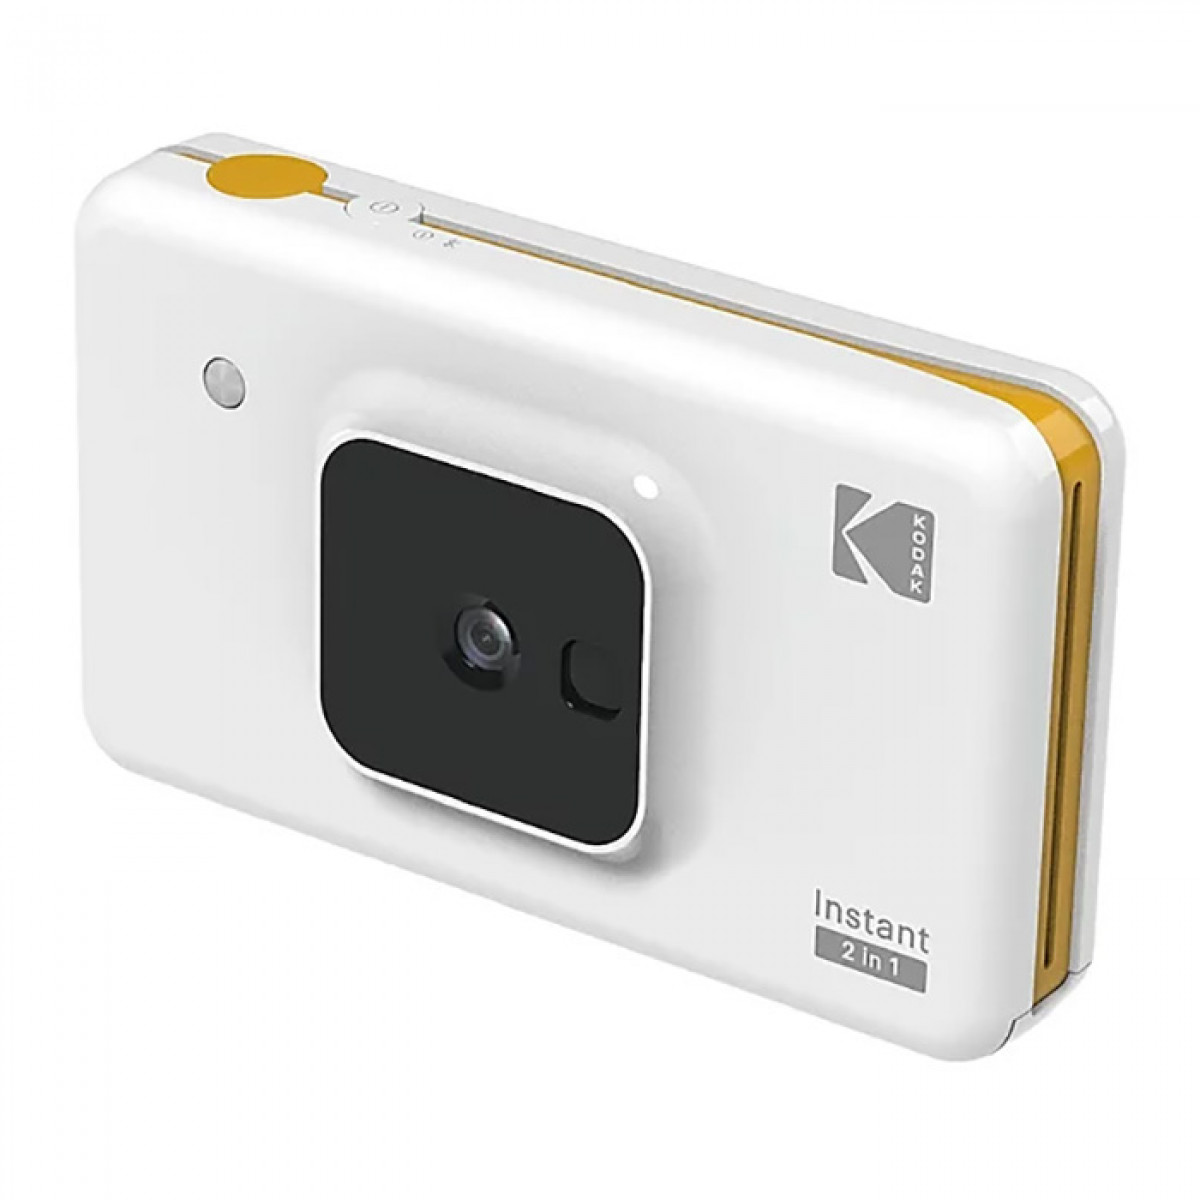 Kodak Kodak Instant 2 in 1 Camera